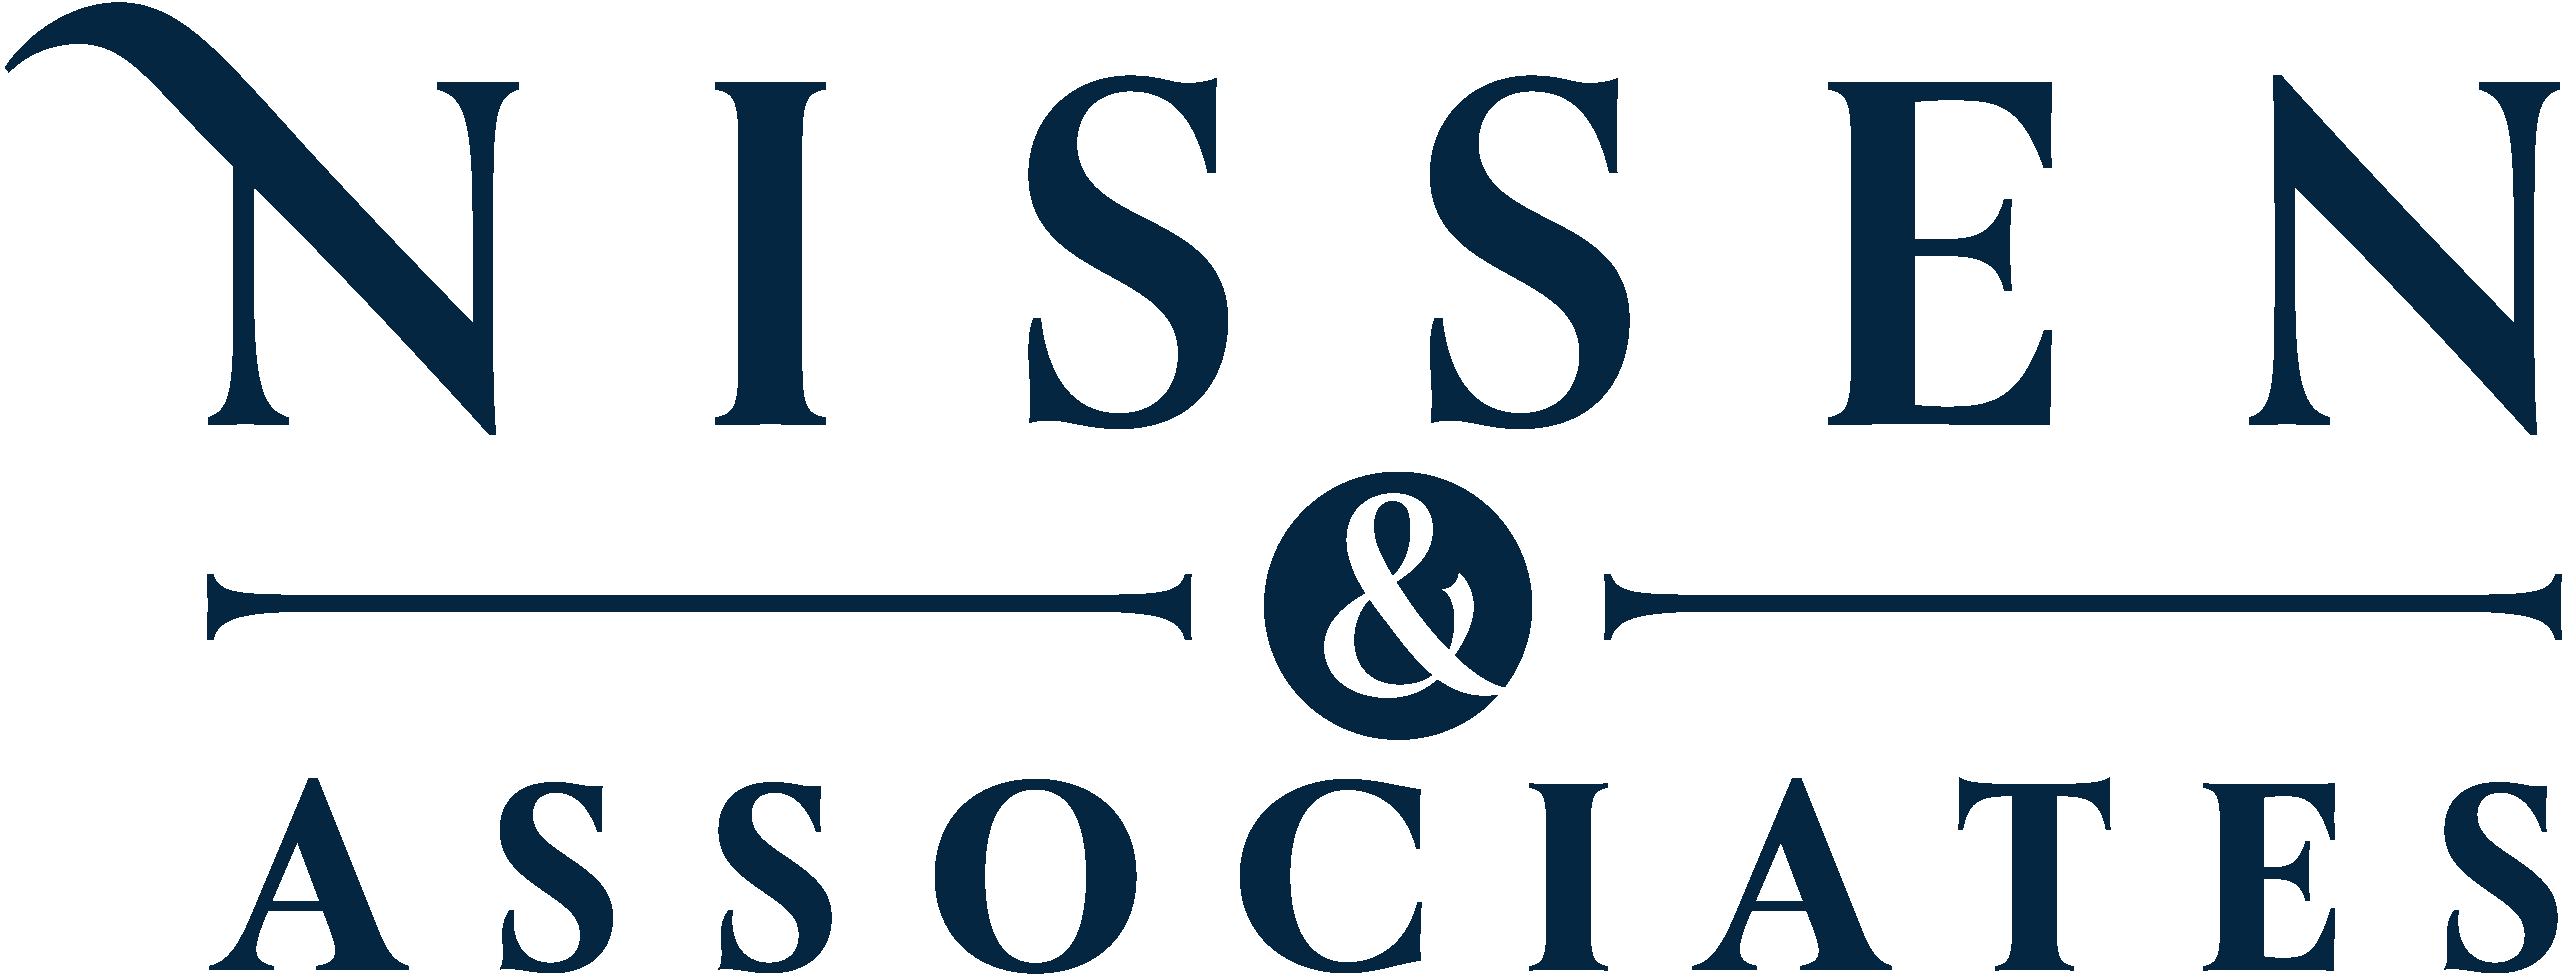 Logo spelling out Nissen and Associates in dark blue